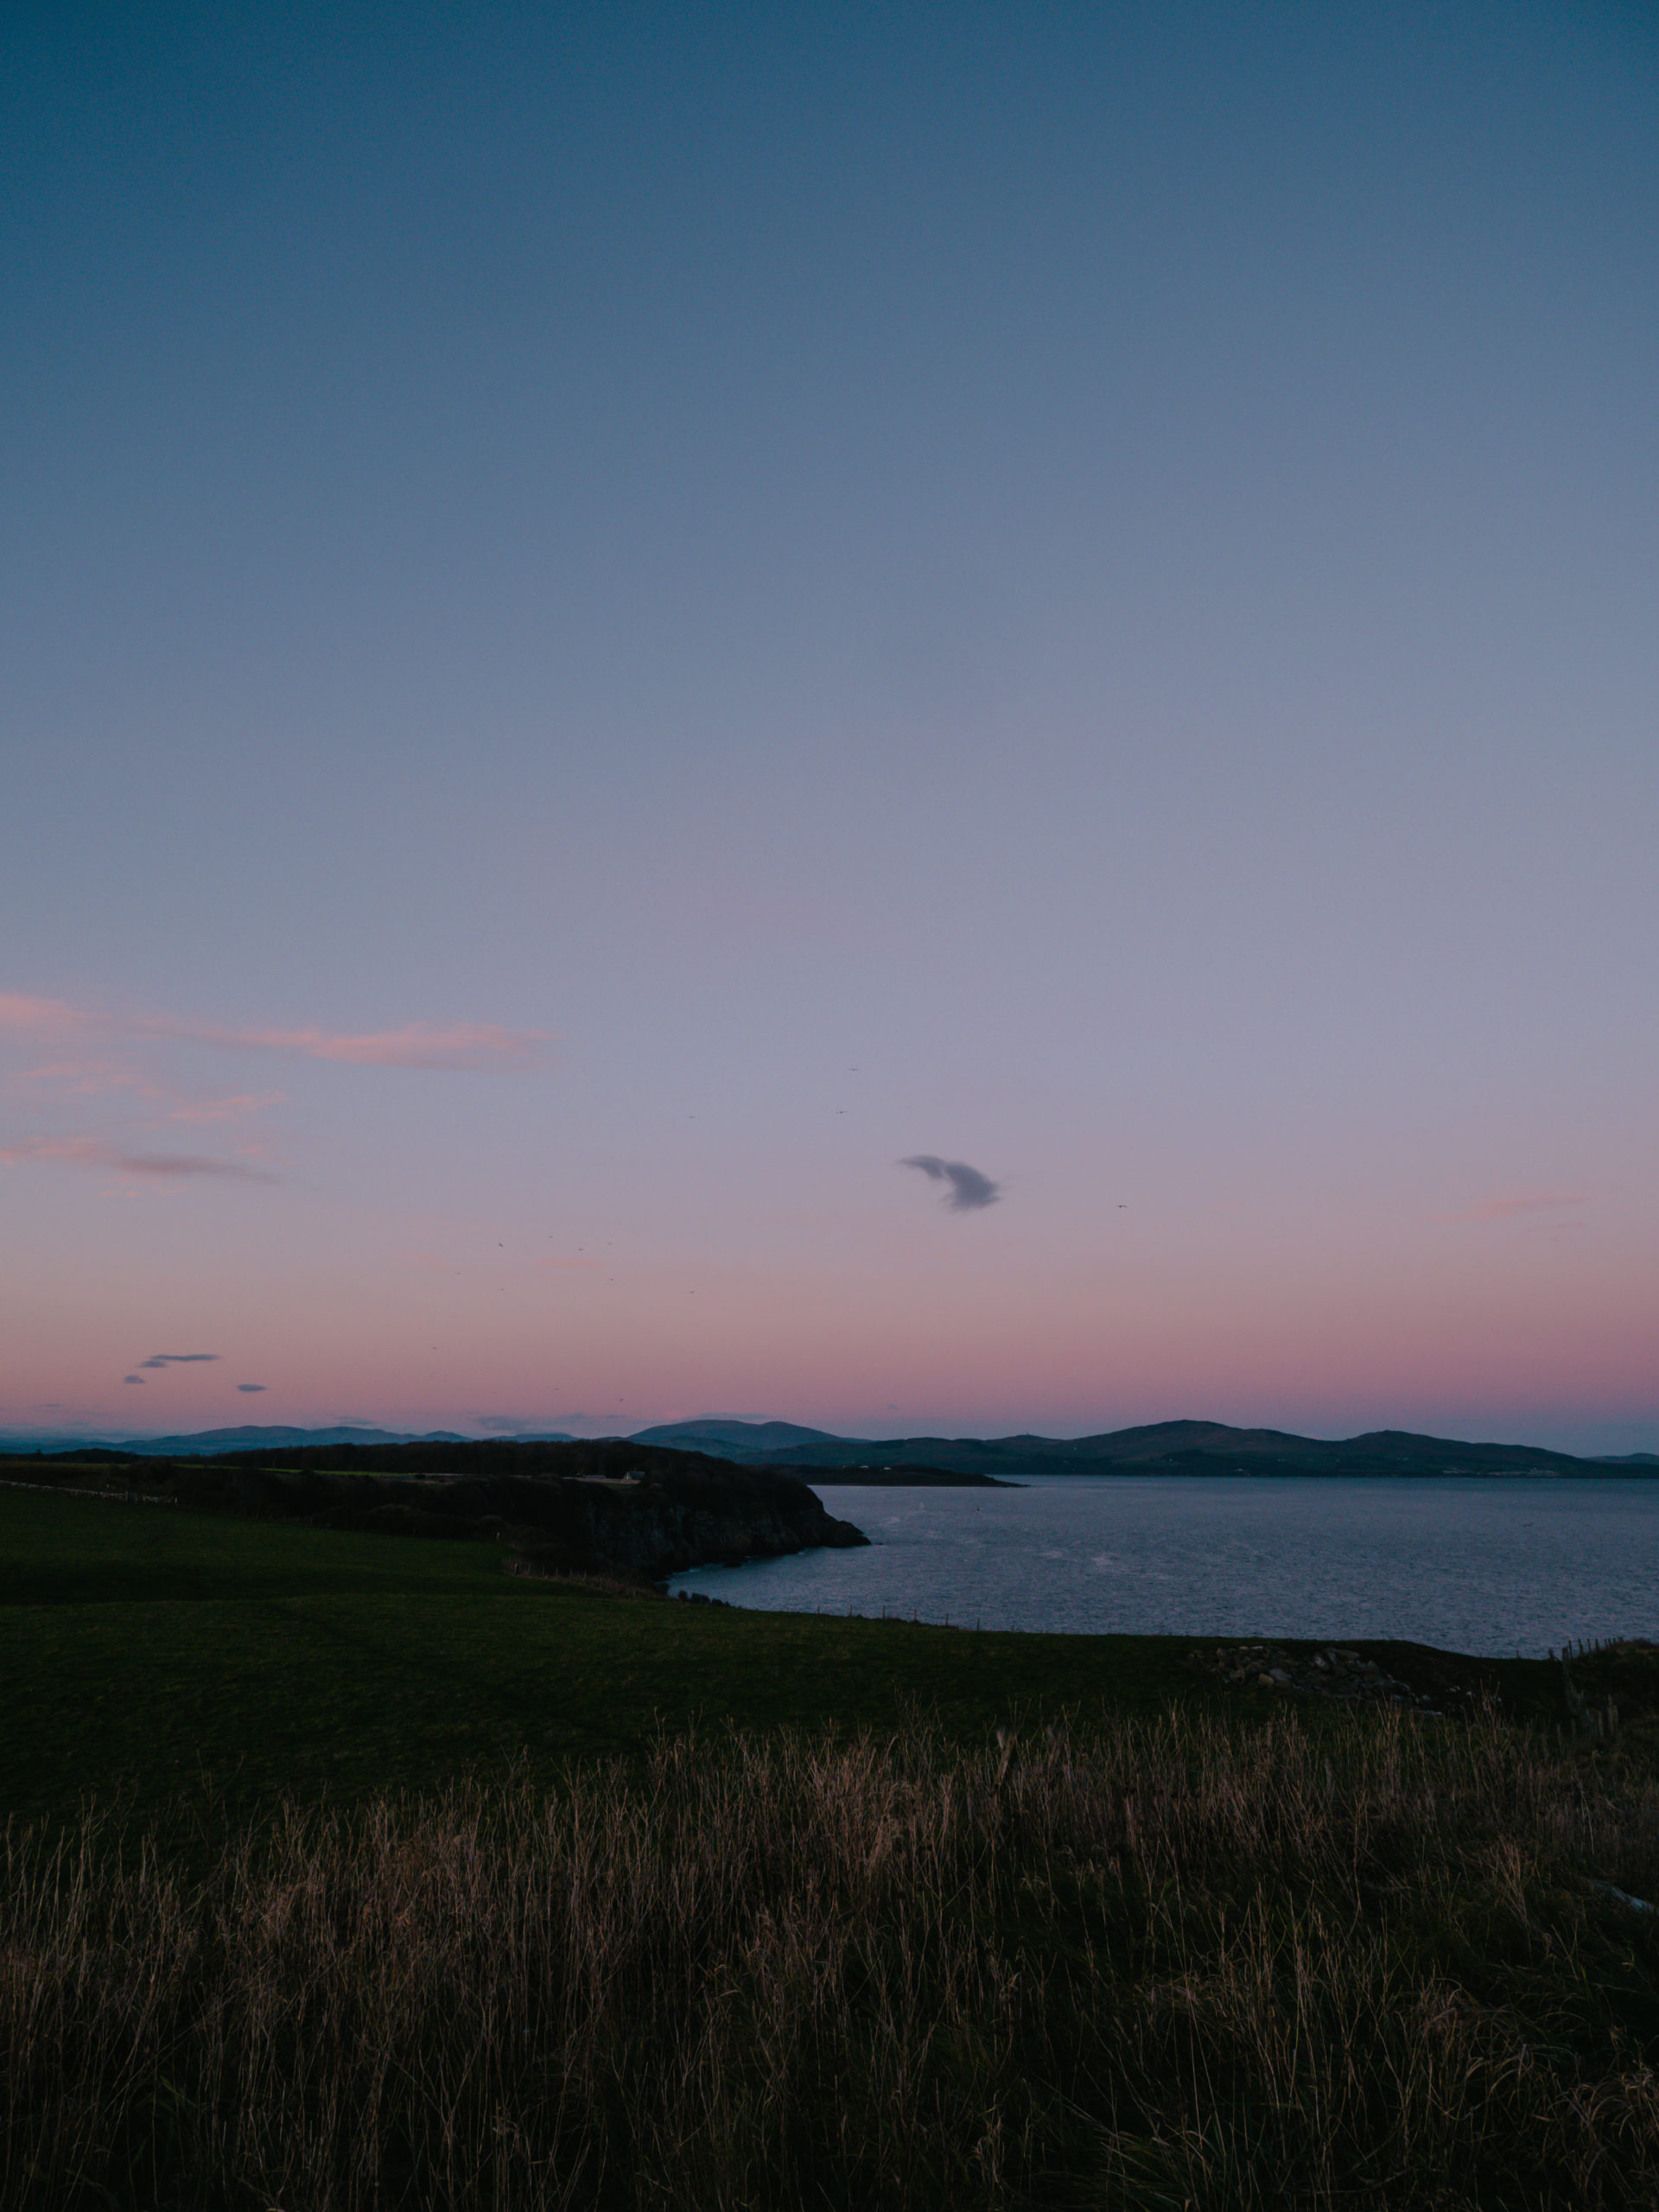 cruggleton castle scotland écosse promenage coucher de soleil mer